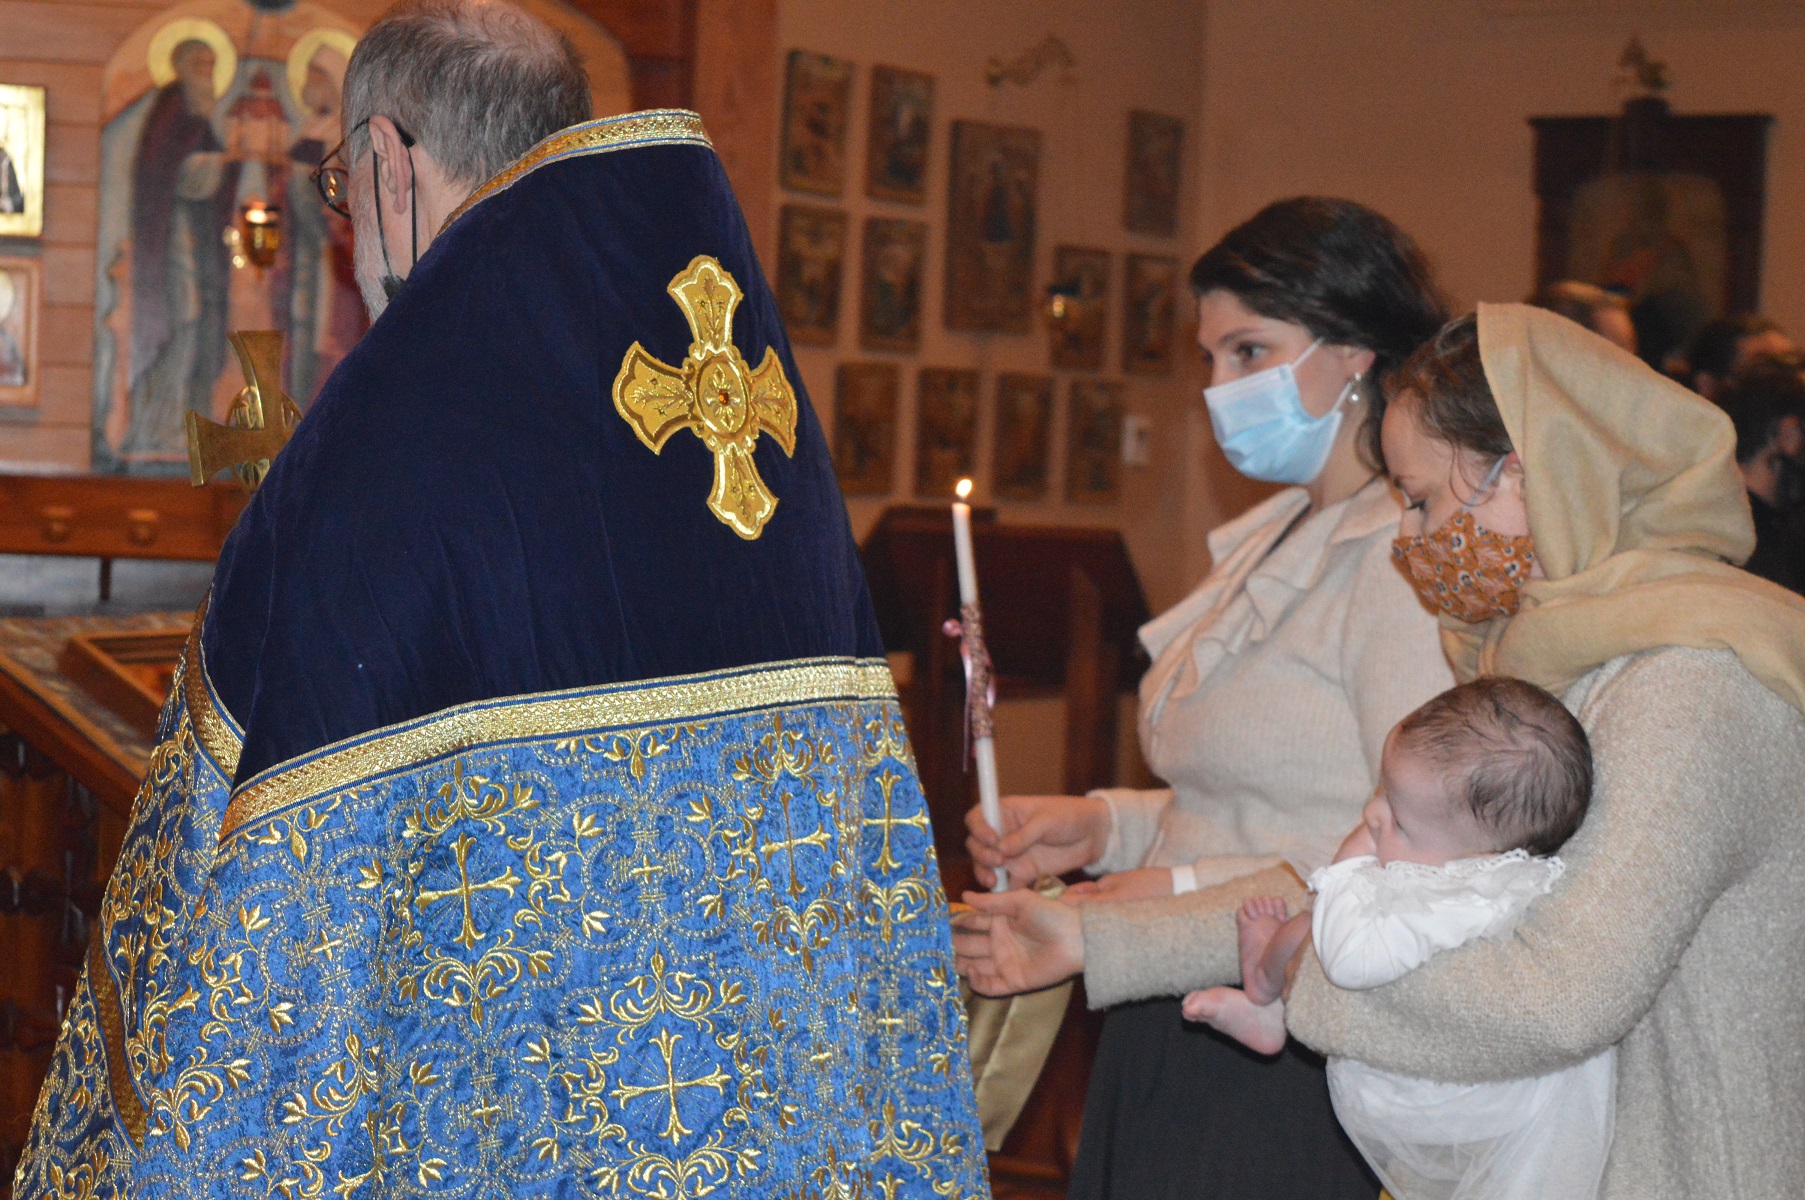 Fr Chad prays as baby Eugenia is held behind him